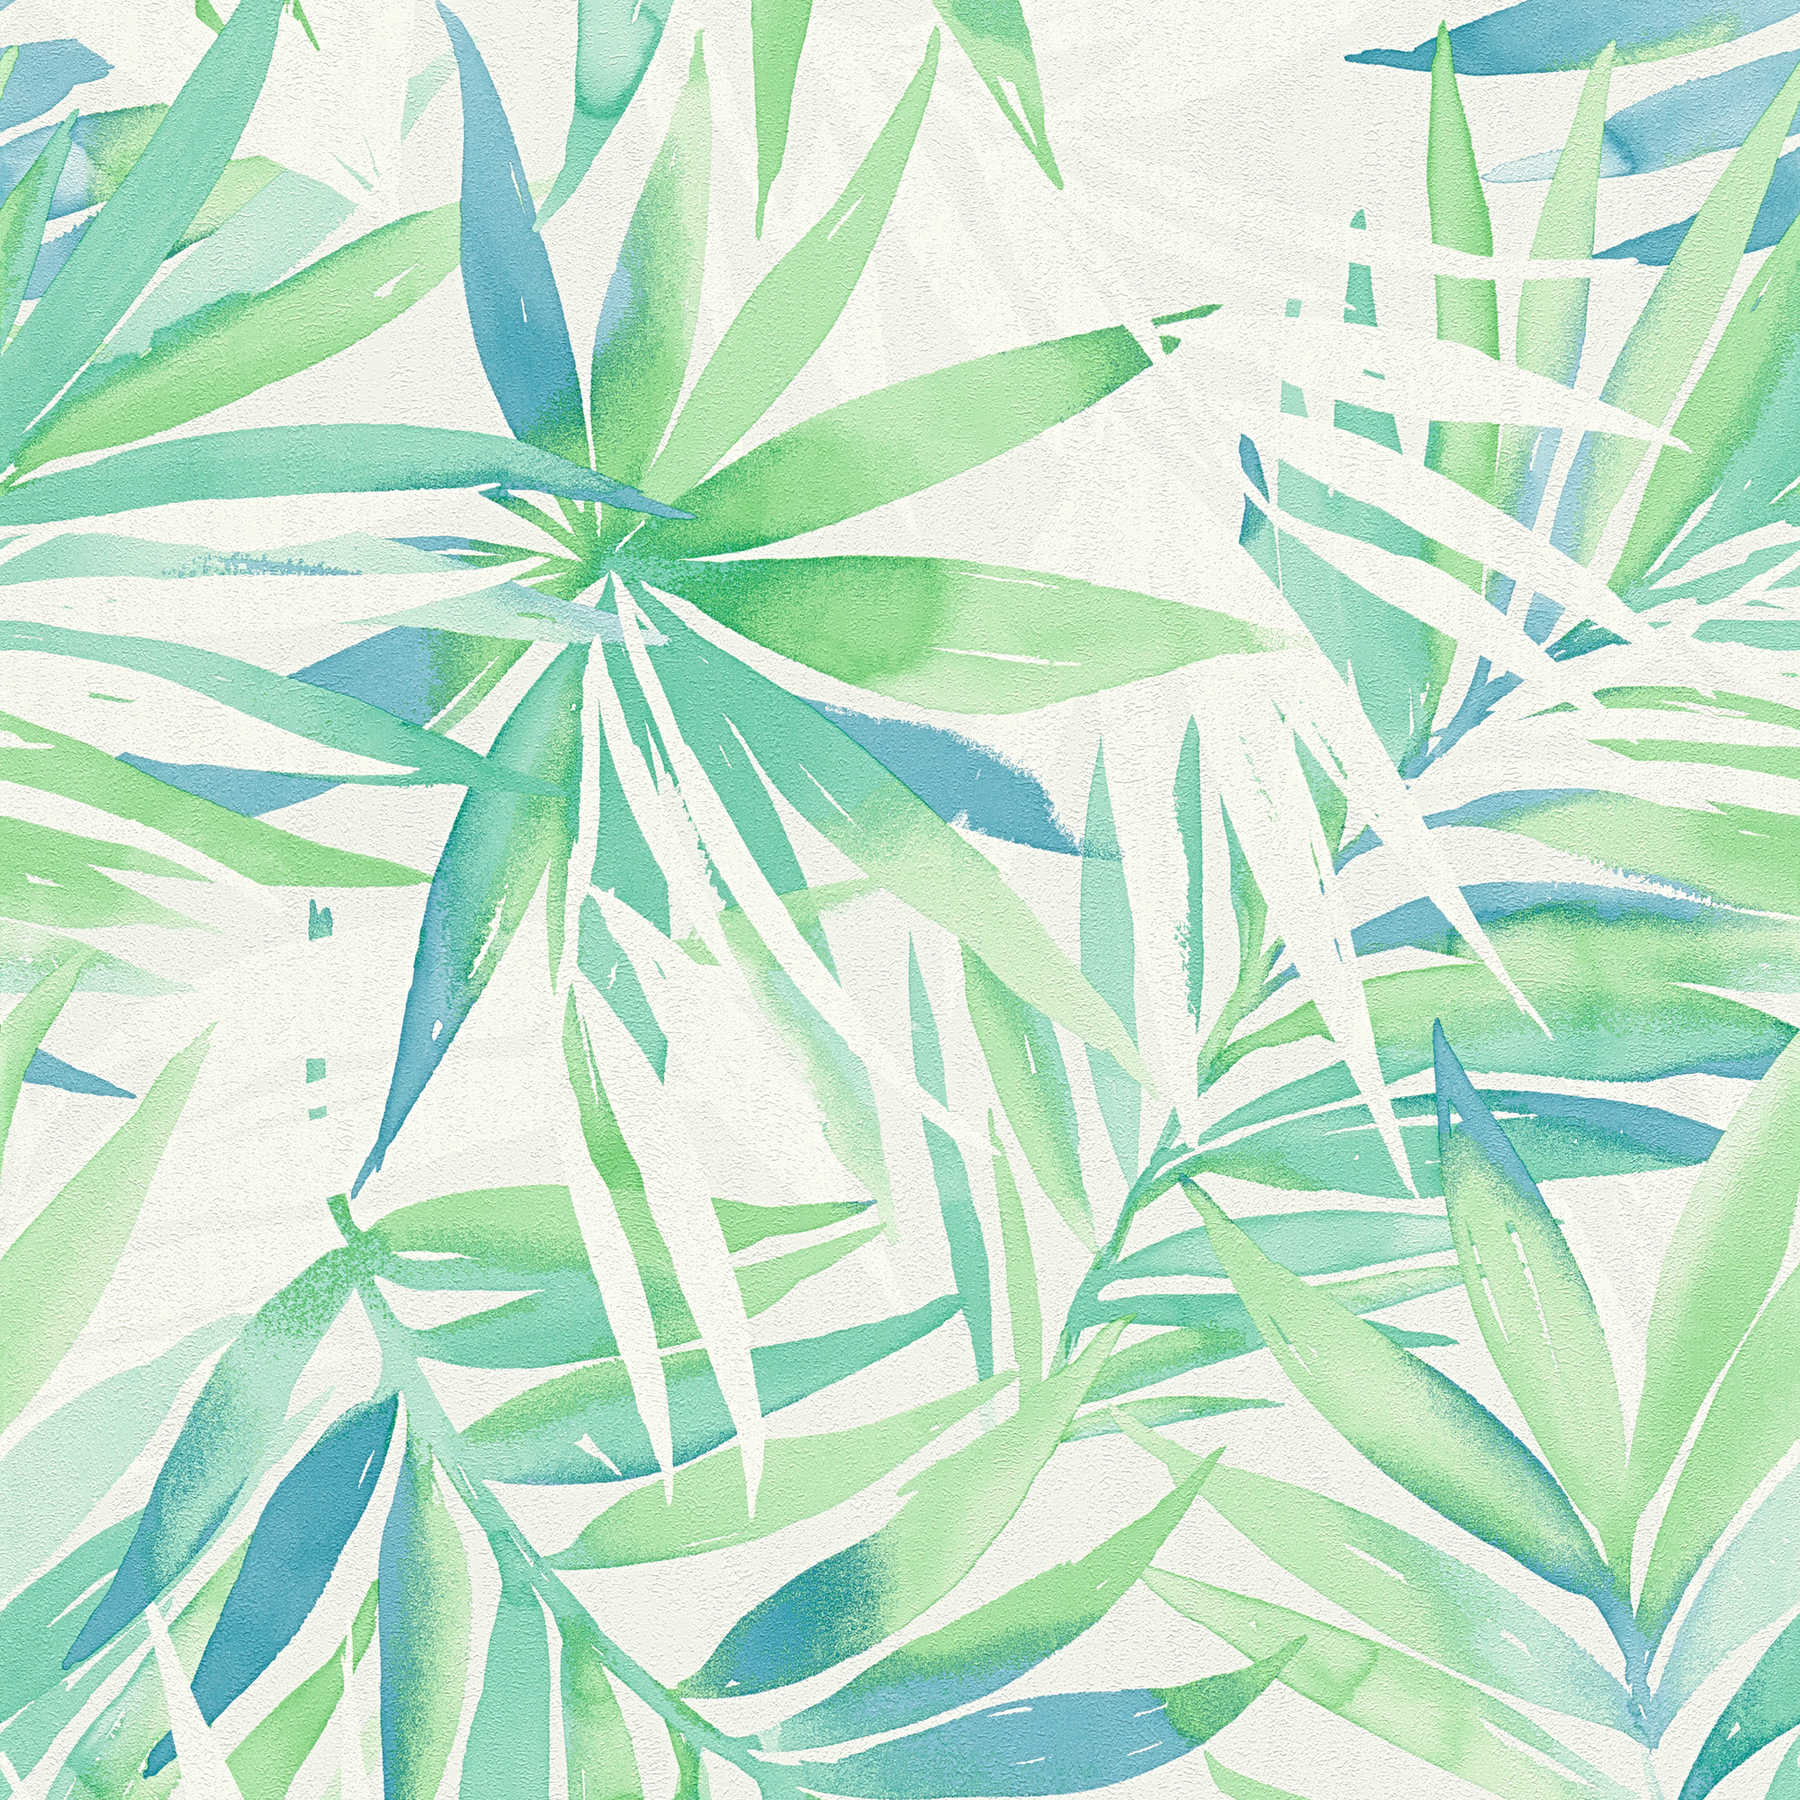 Jungle wallpaper leaf motif in watercolour style - green
